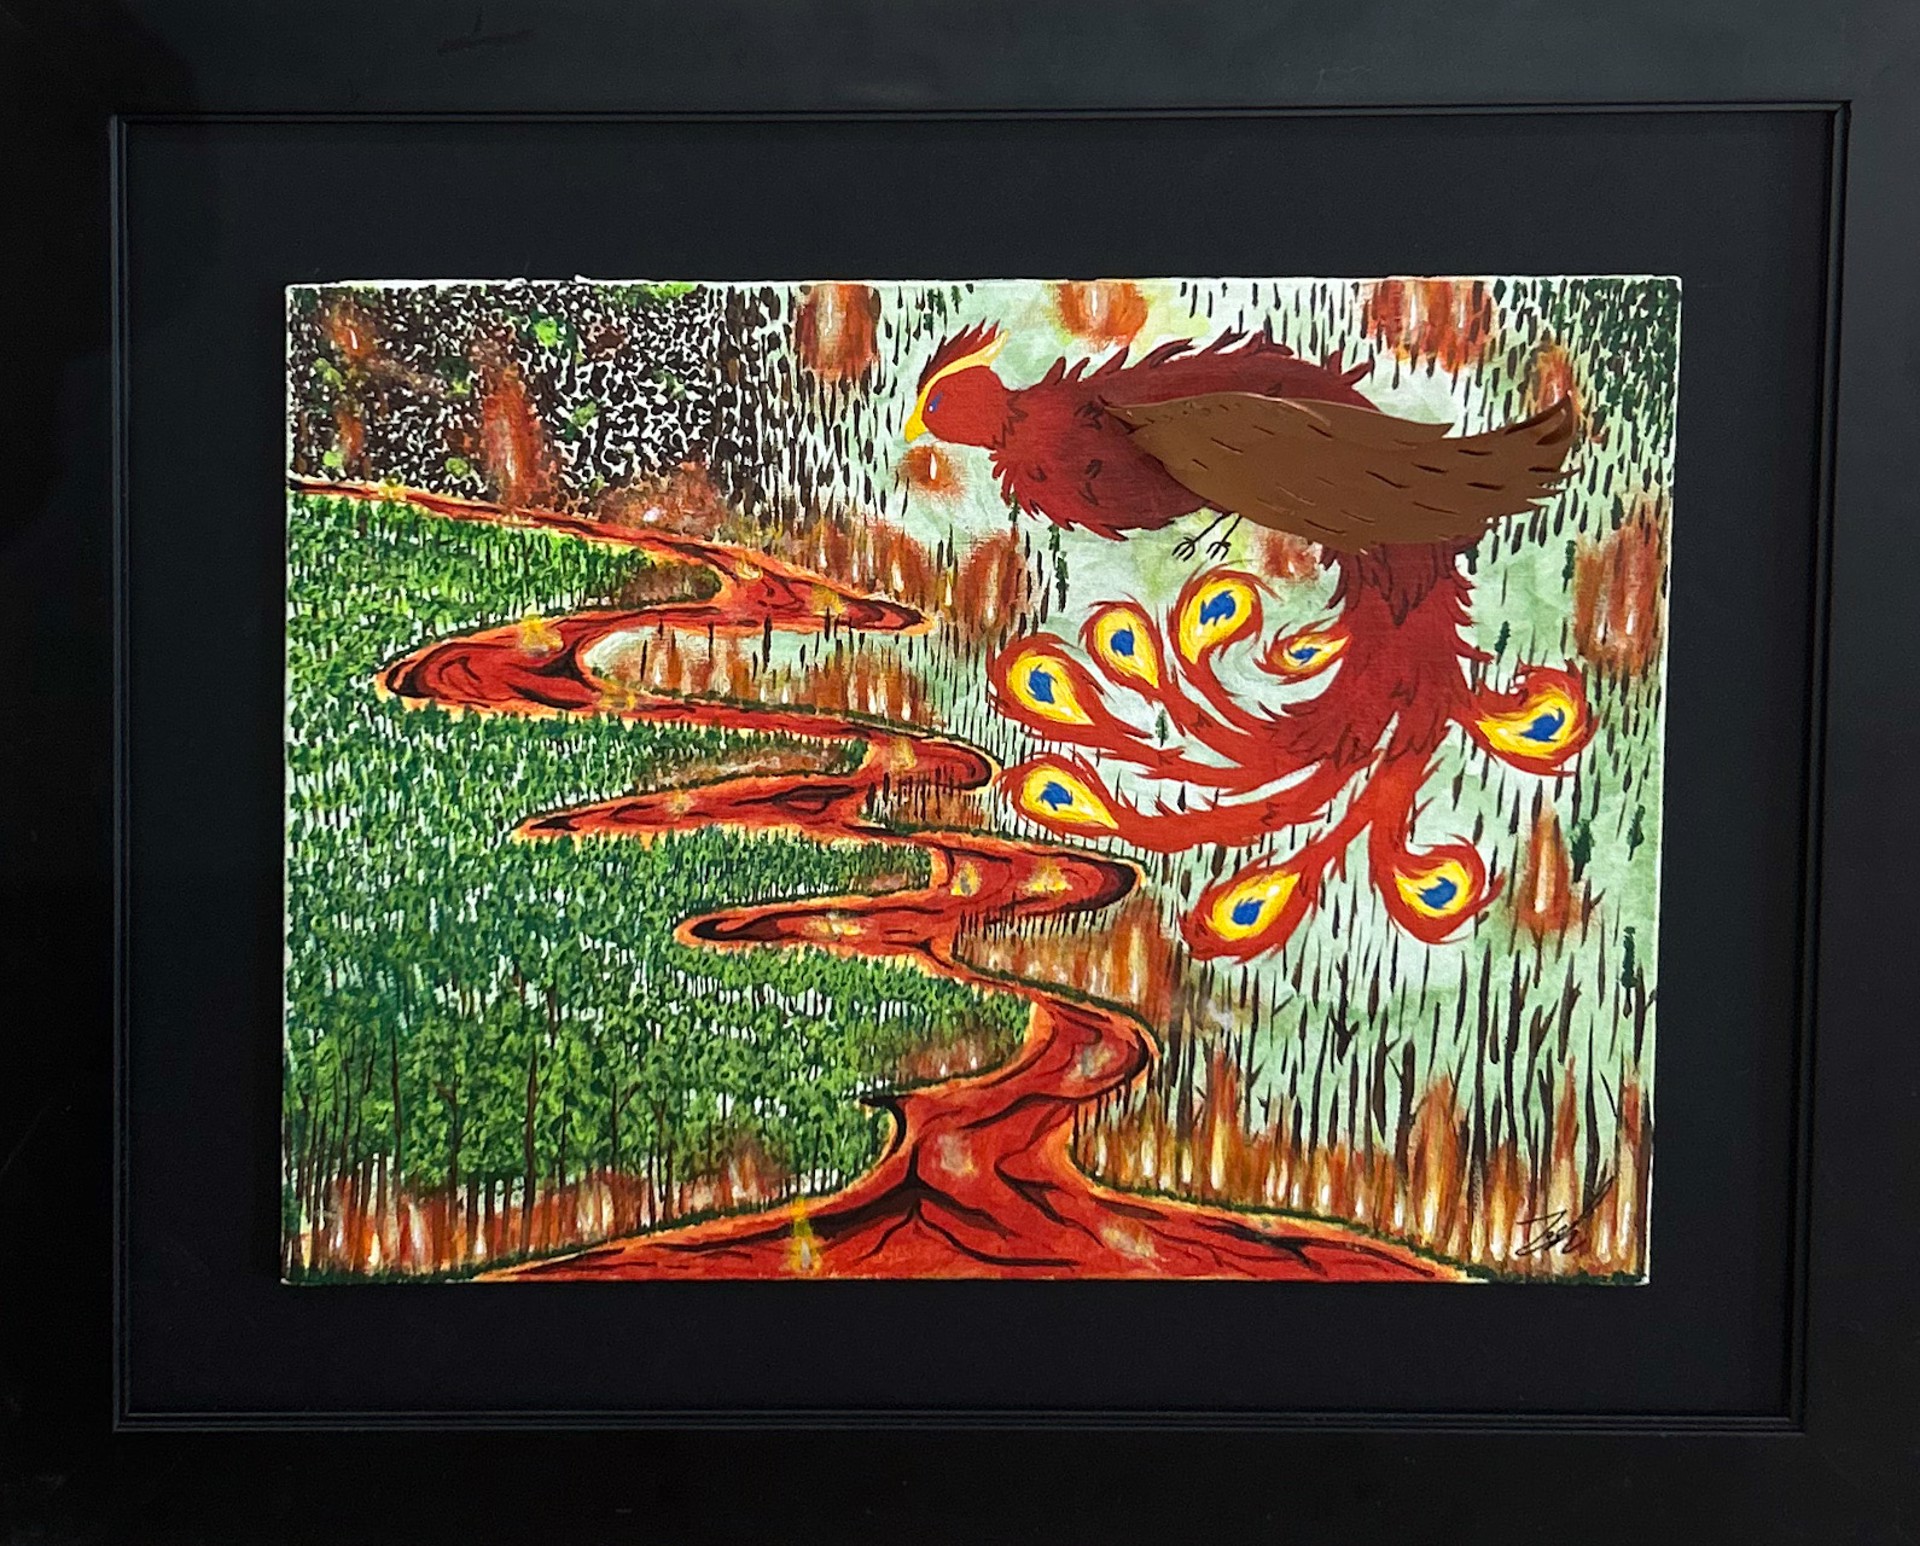 "Phoenix Fire" by Zoe Hatziathanassiou by Gilbert High School